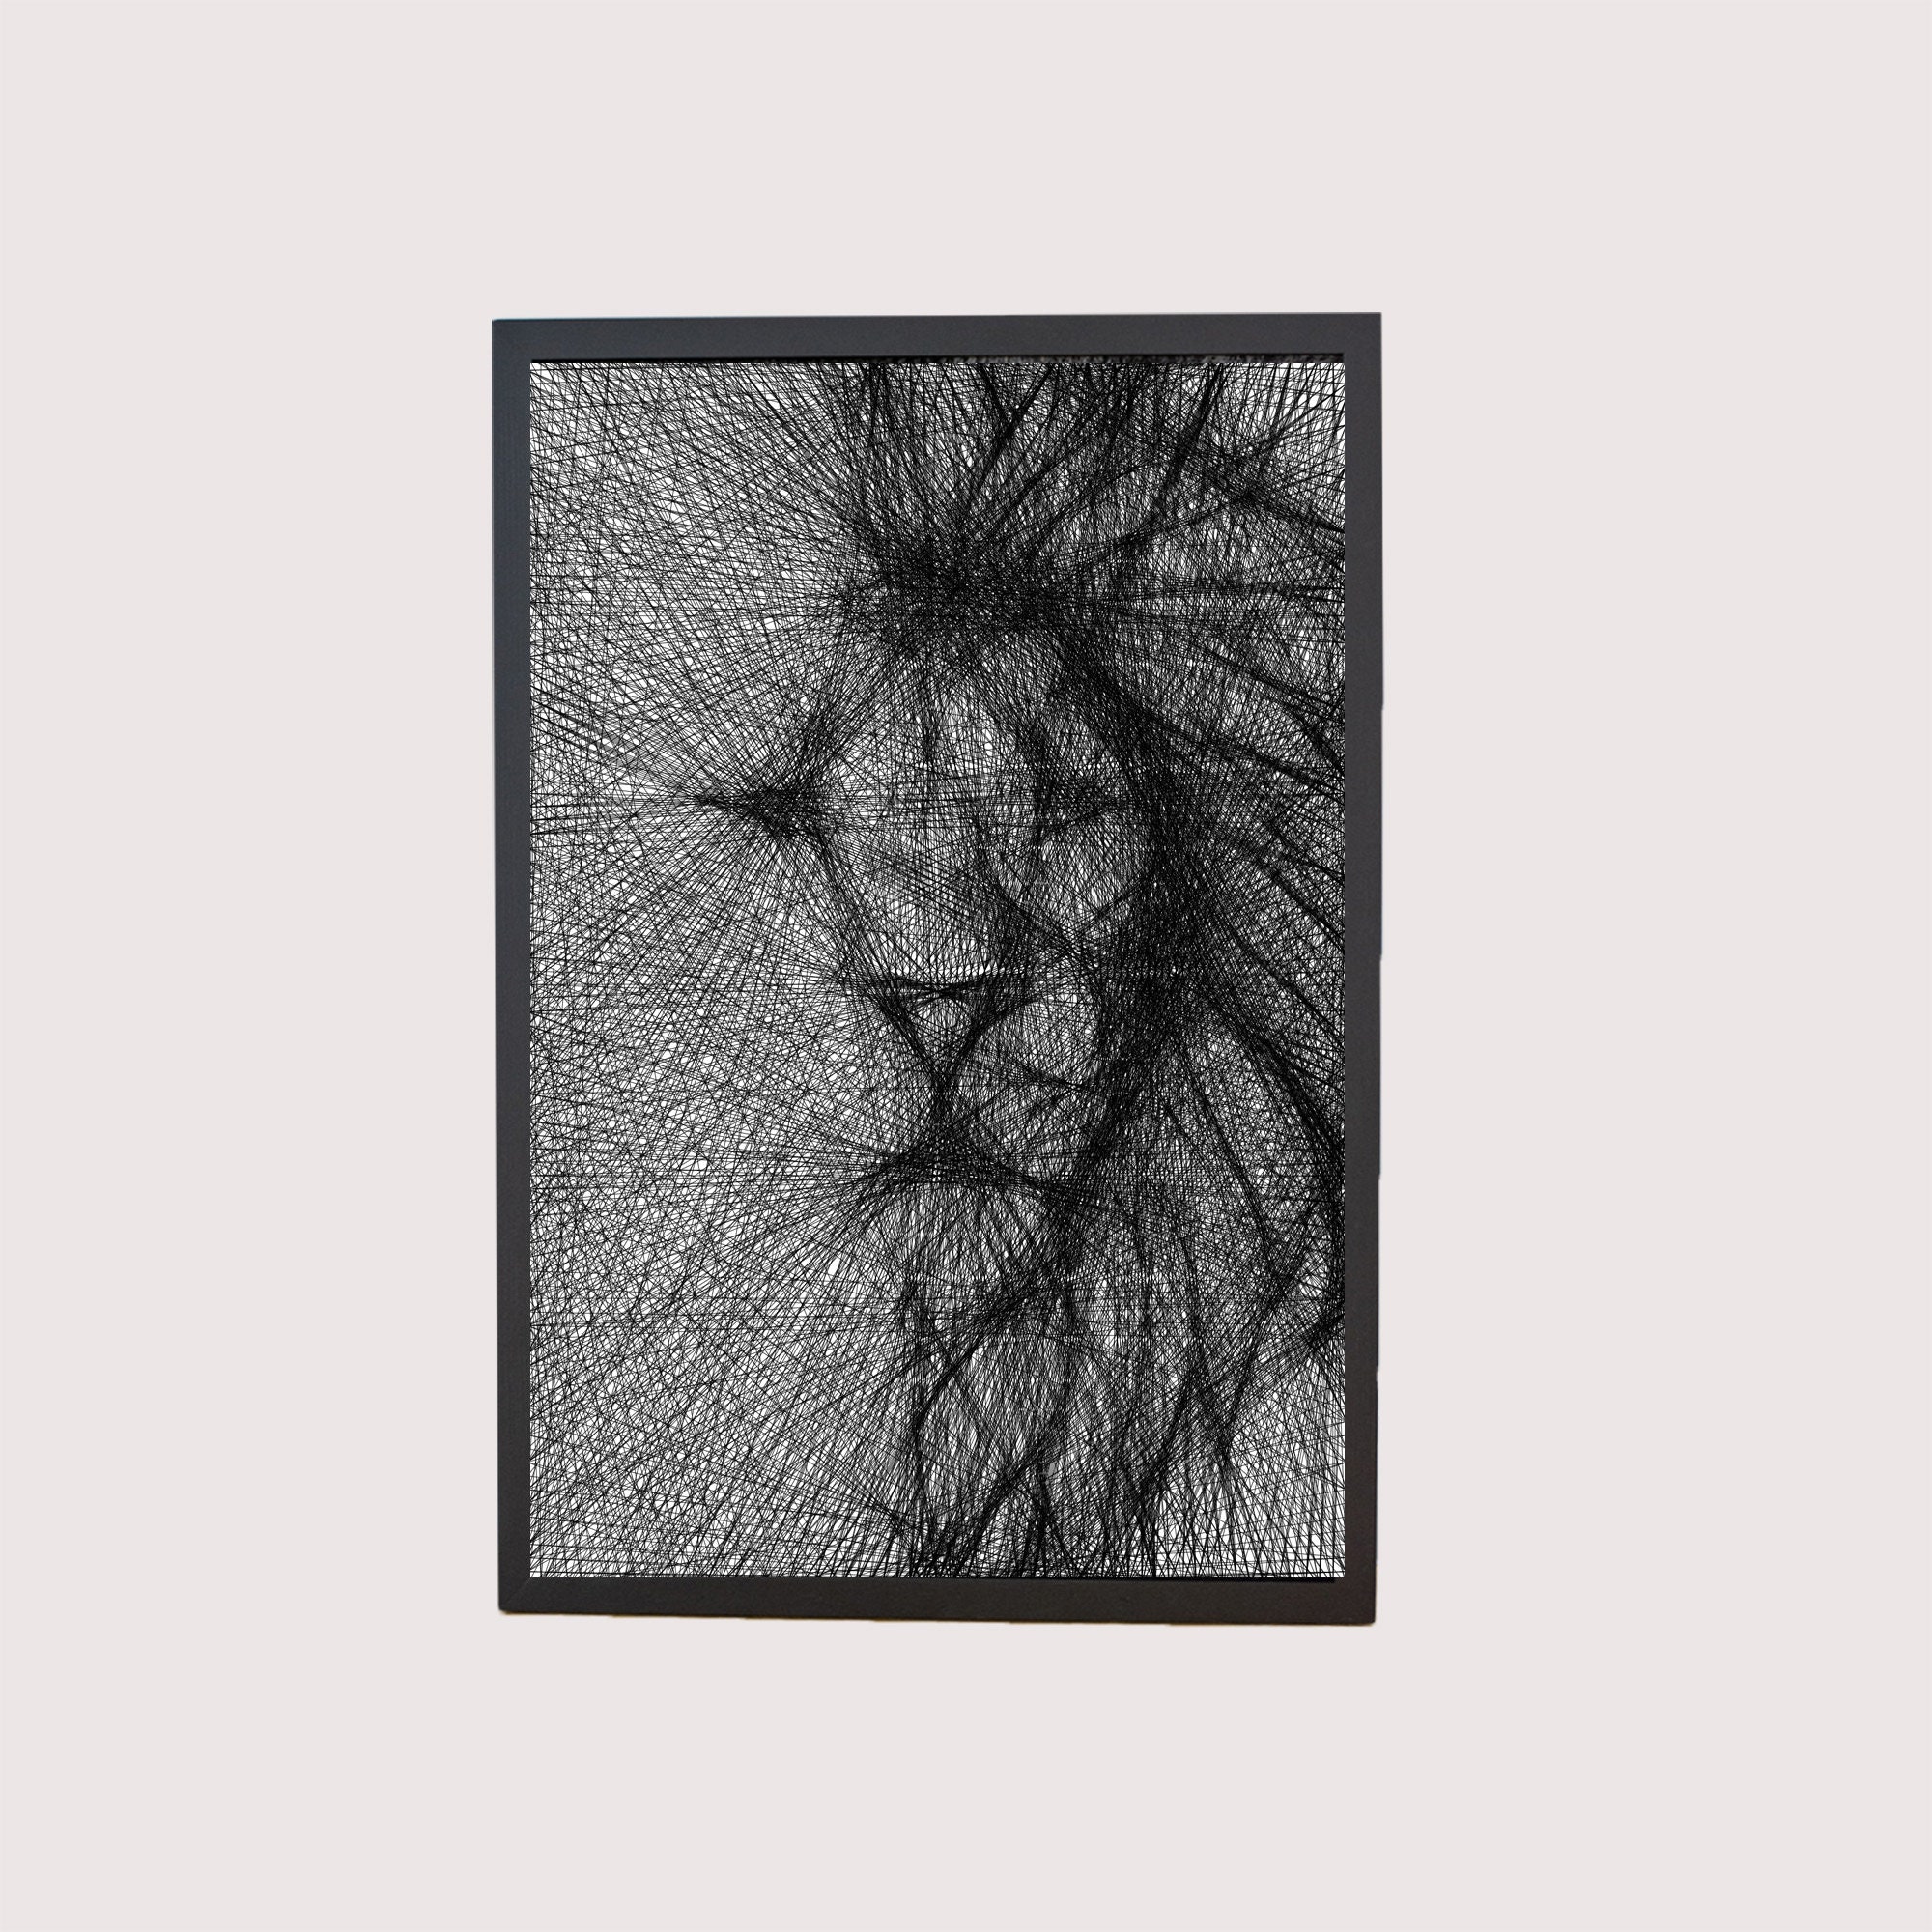 DIY String Art Template Digital String Art Lion 